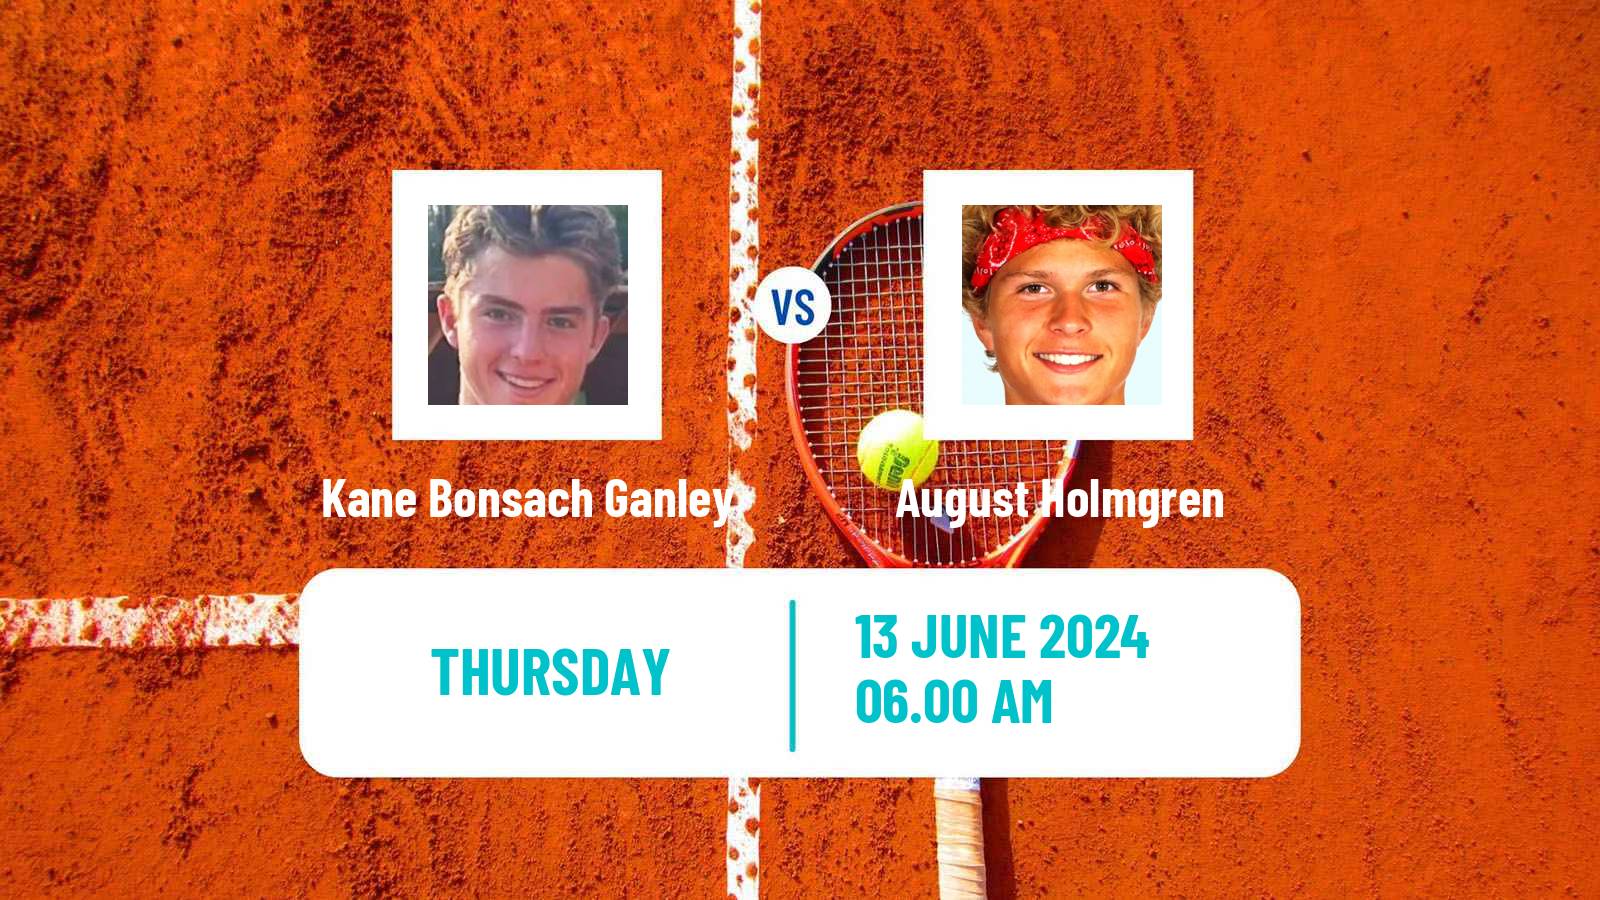 Tennis ITF M25 Aarhus Men Kane Bonsach Ganley - August Holmgren